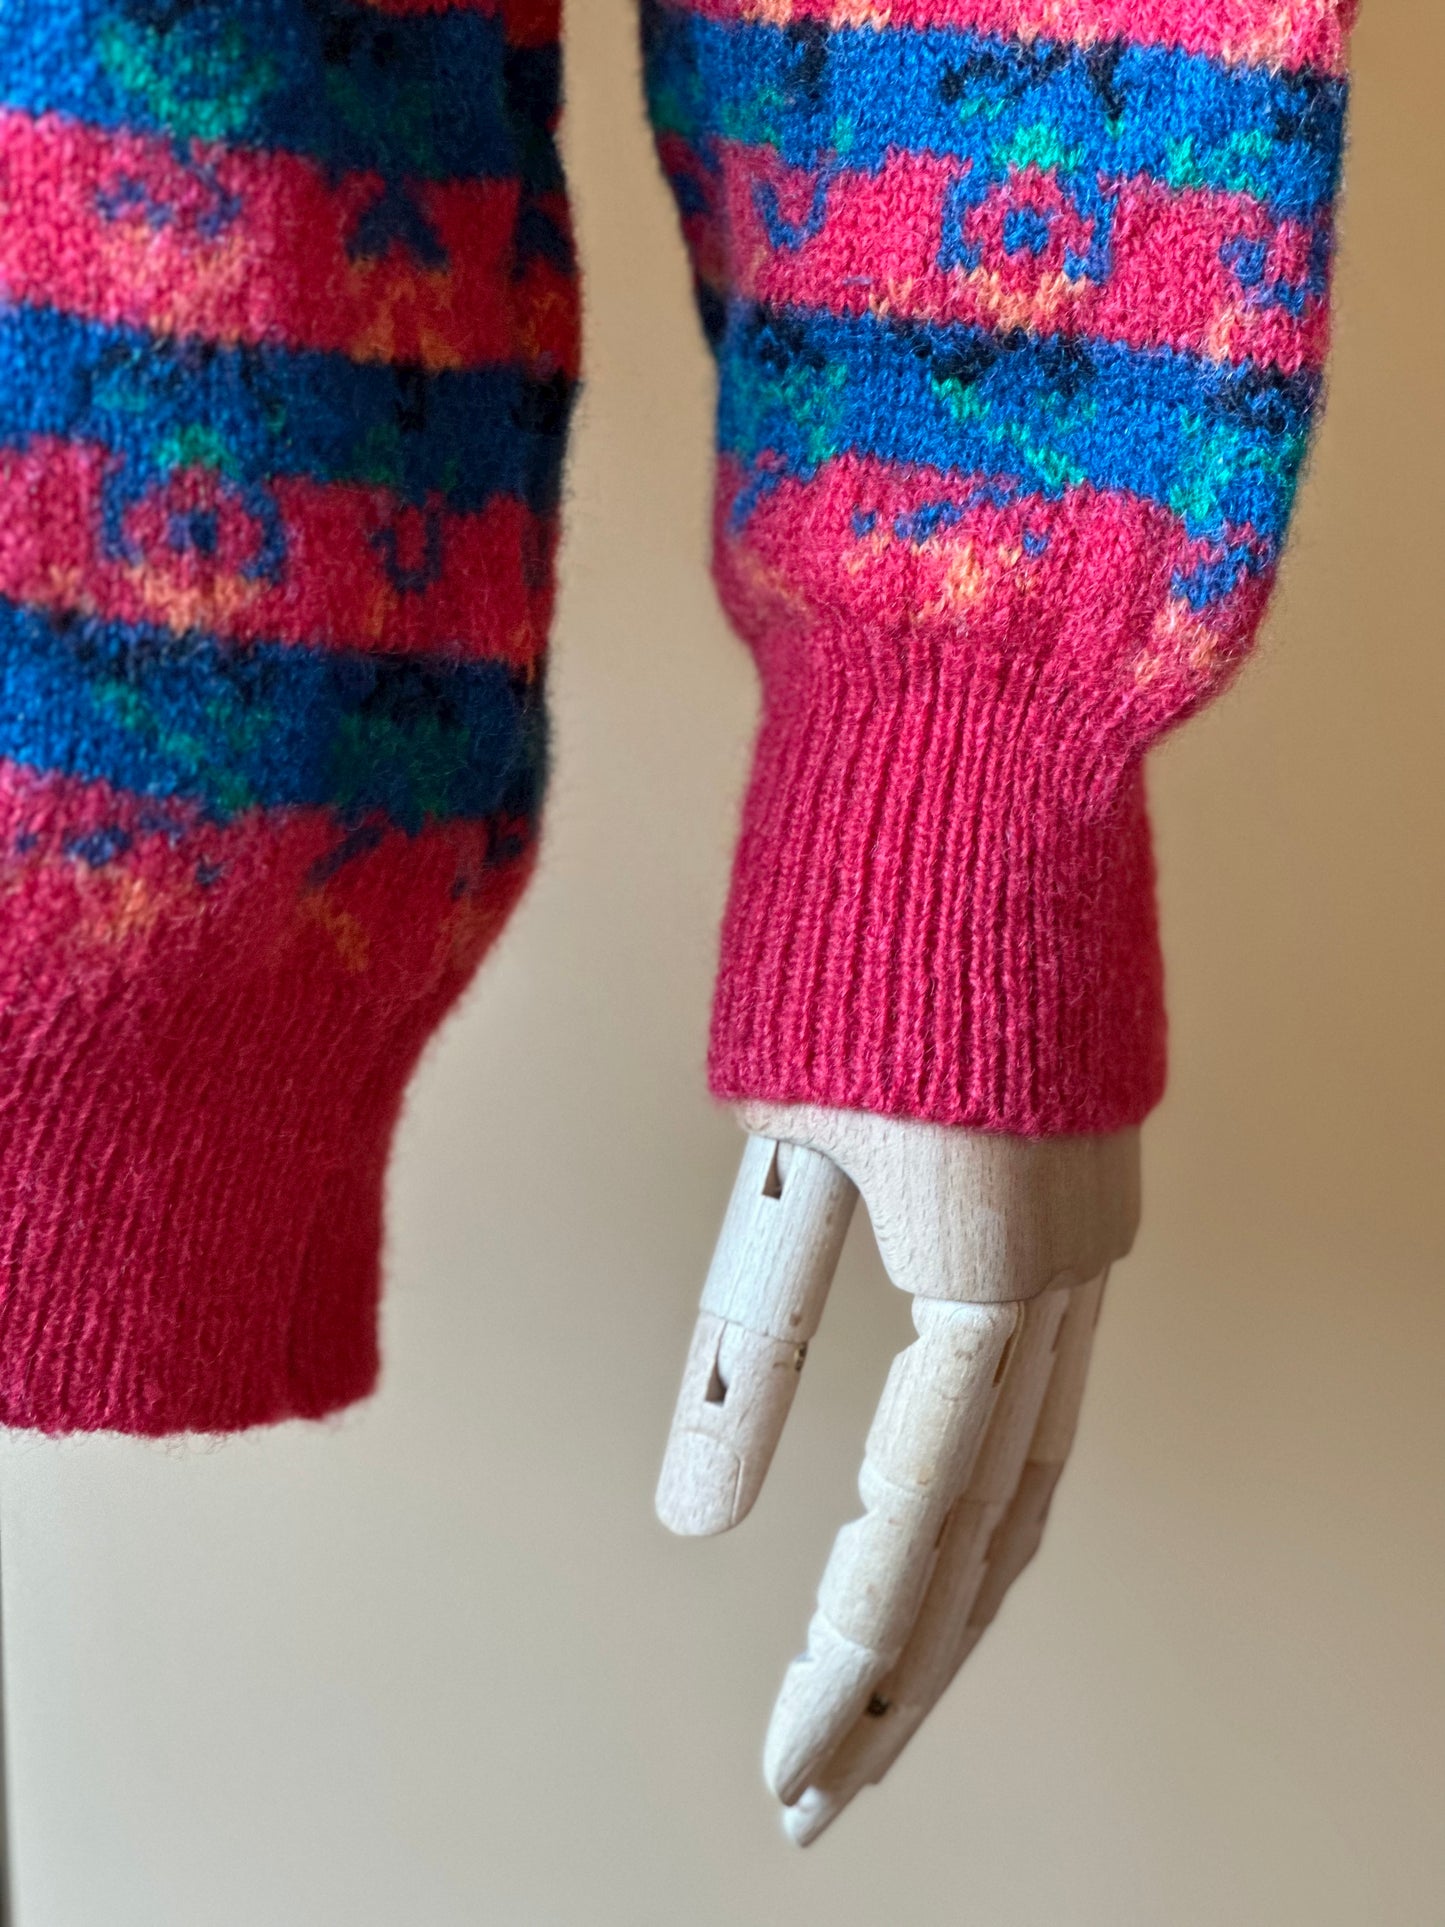 Vintage Michael Ross Fair Isle Sweater 100% Shetland Wool